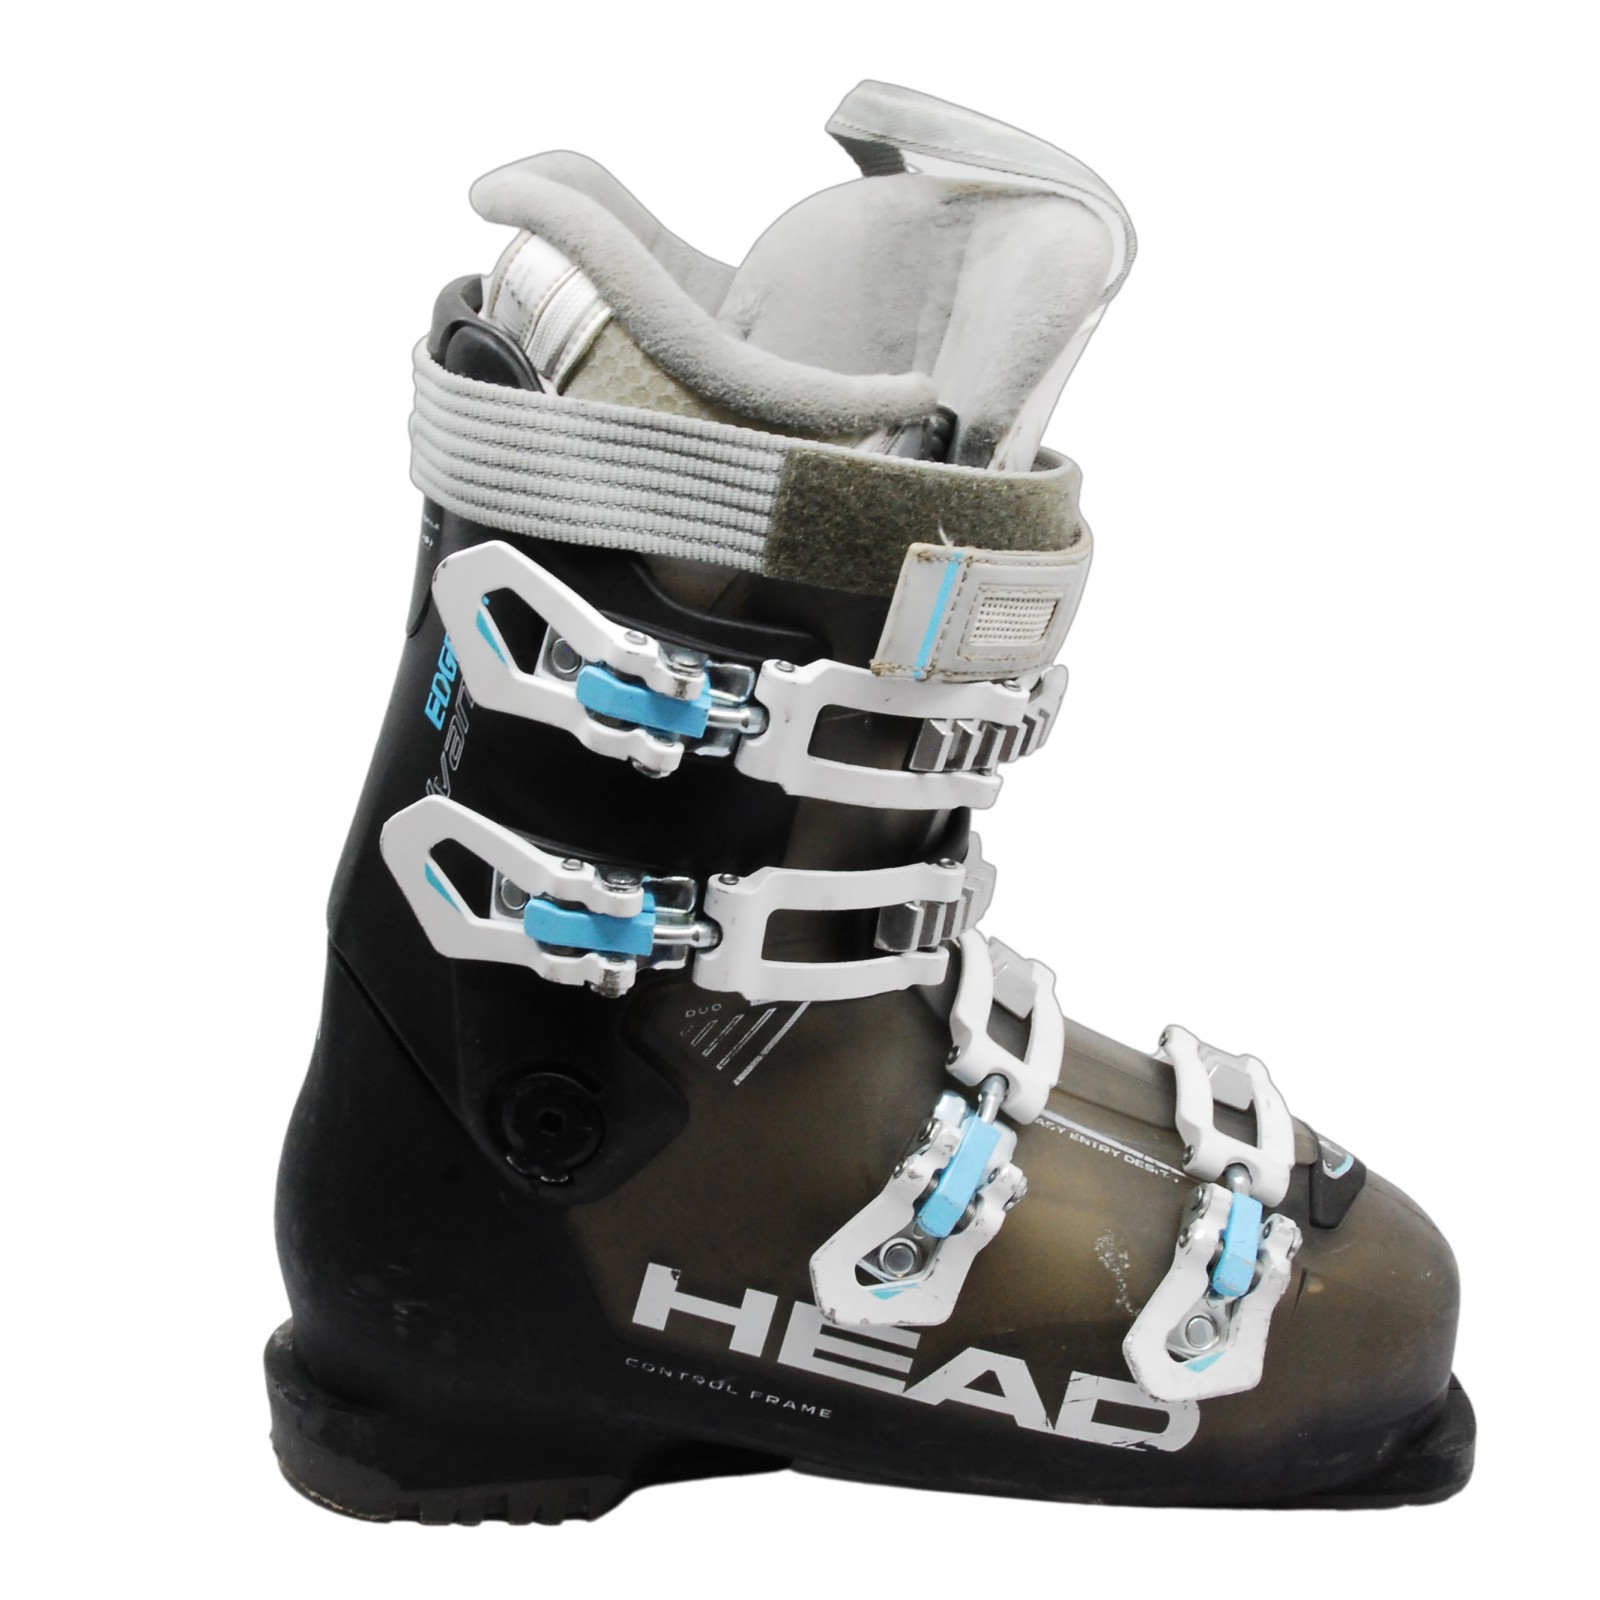 chaussures ski alpin femme occasion - Chaussures garanties sur Everide